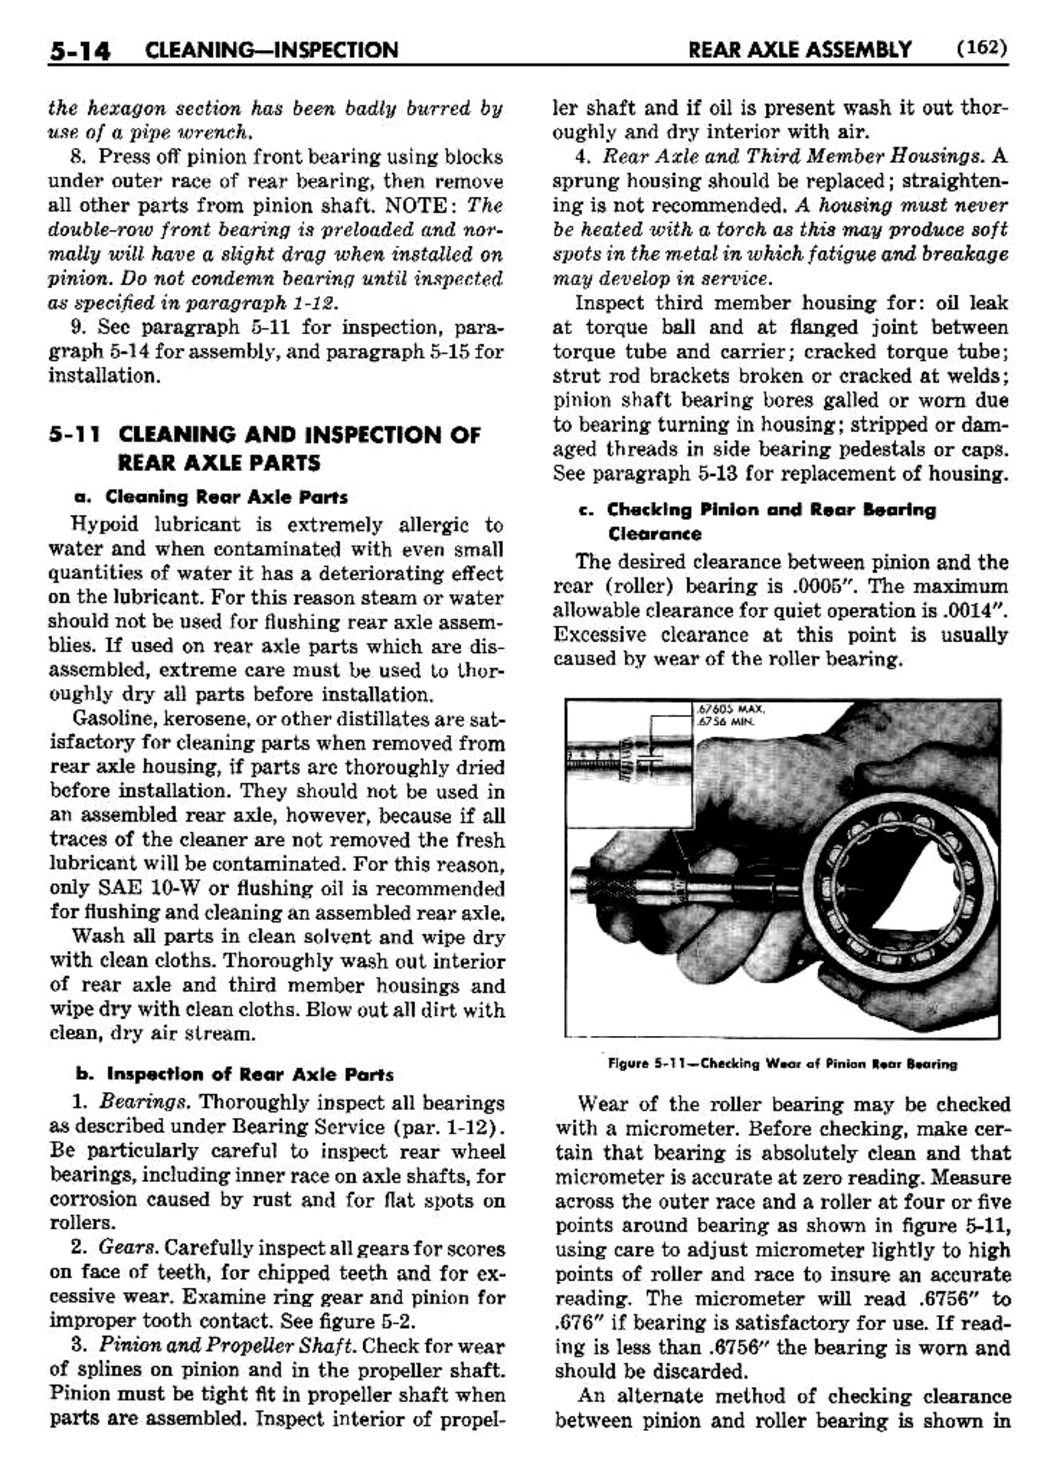 n_06 1950 Buick Shop Manual - Rear Axle-014-014.jpg